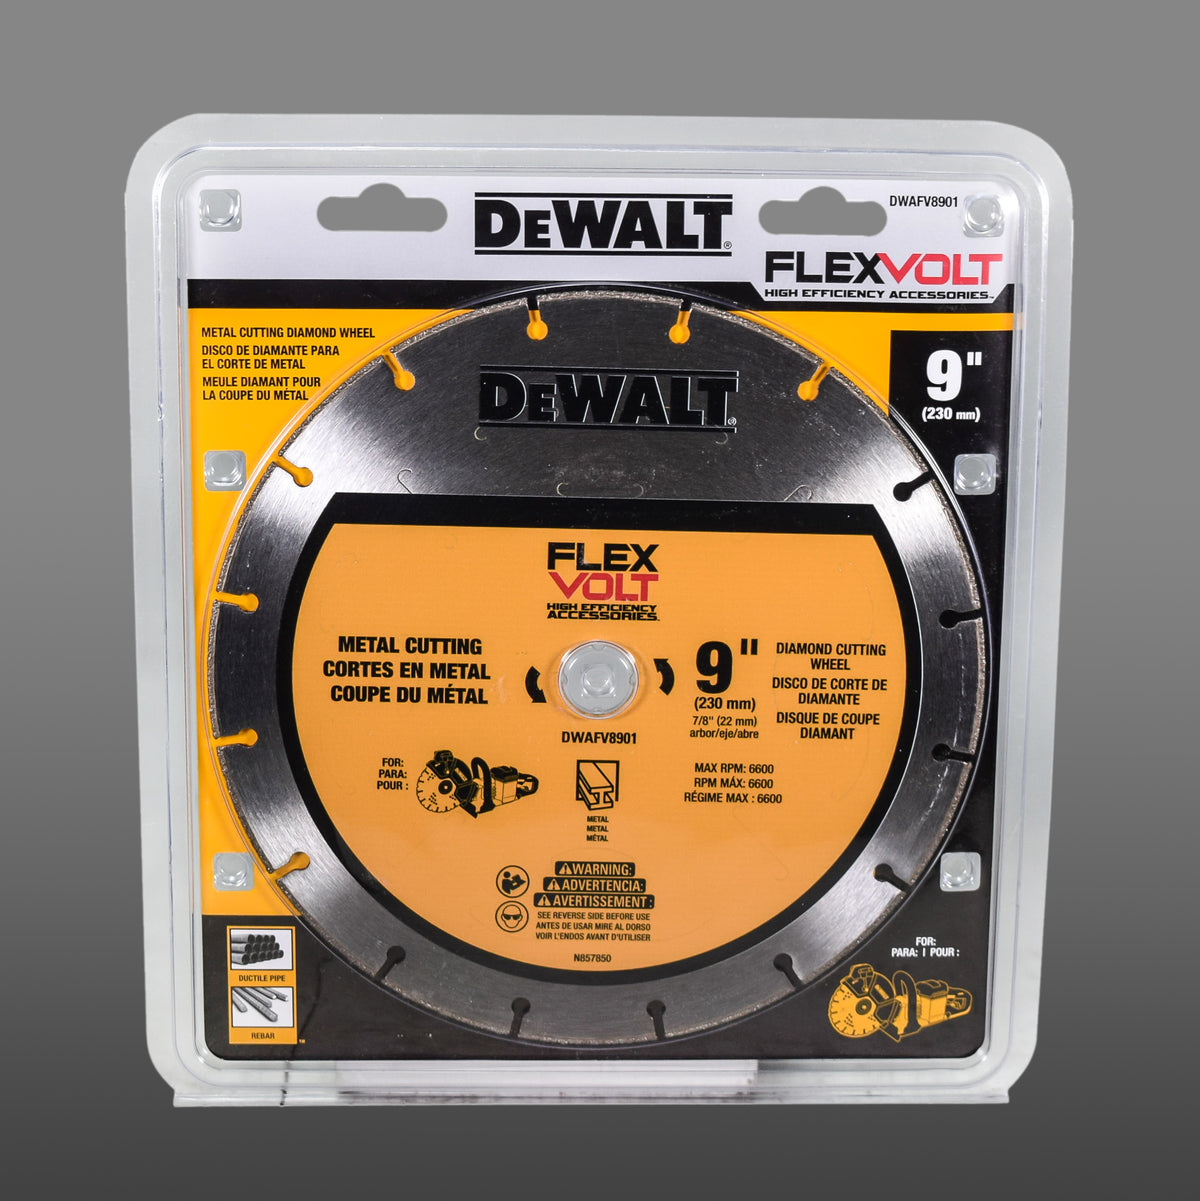 Dewalt DWAFV8901 Flexvolt 9" Metal Cutting Diamond Wheel